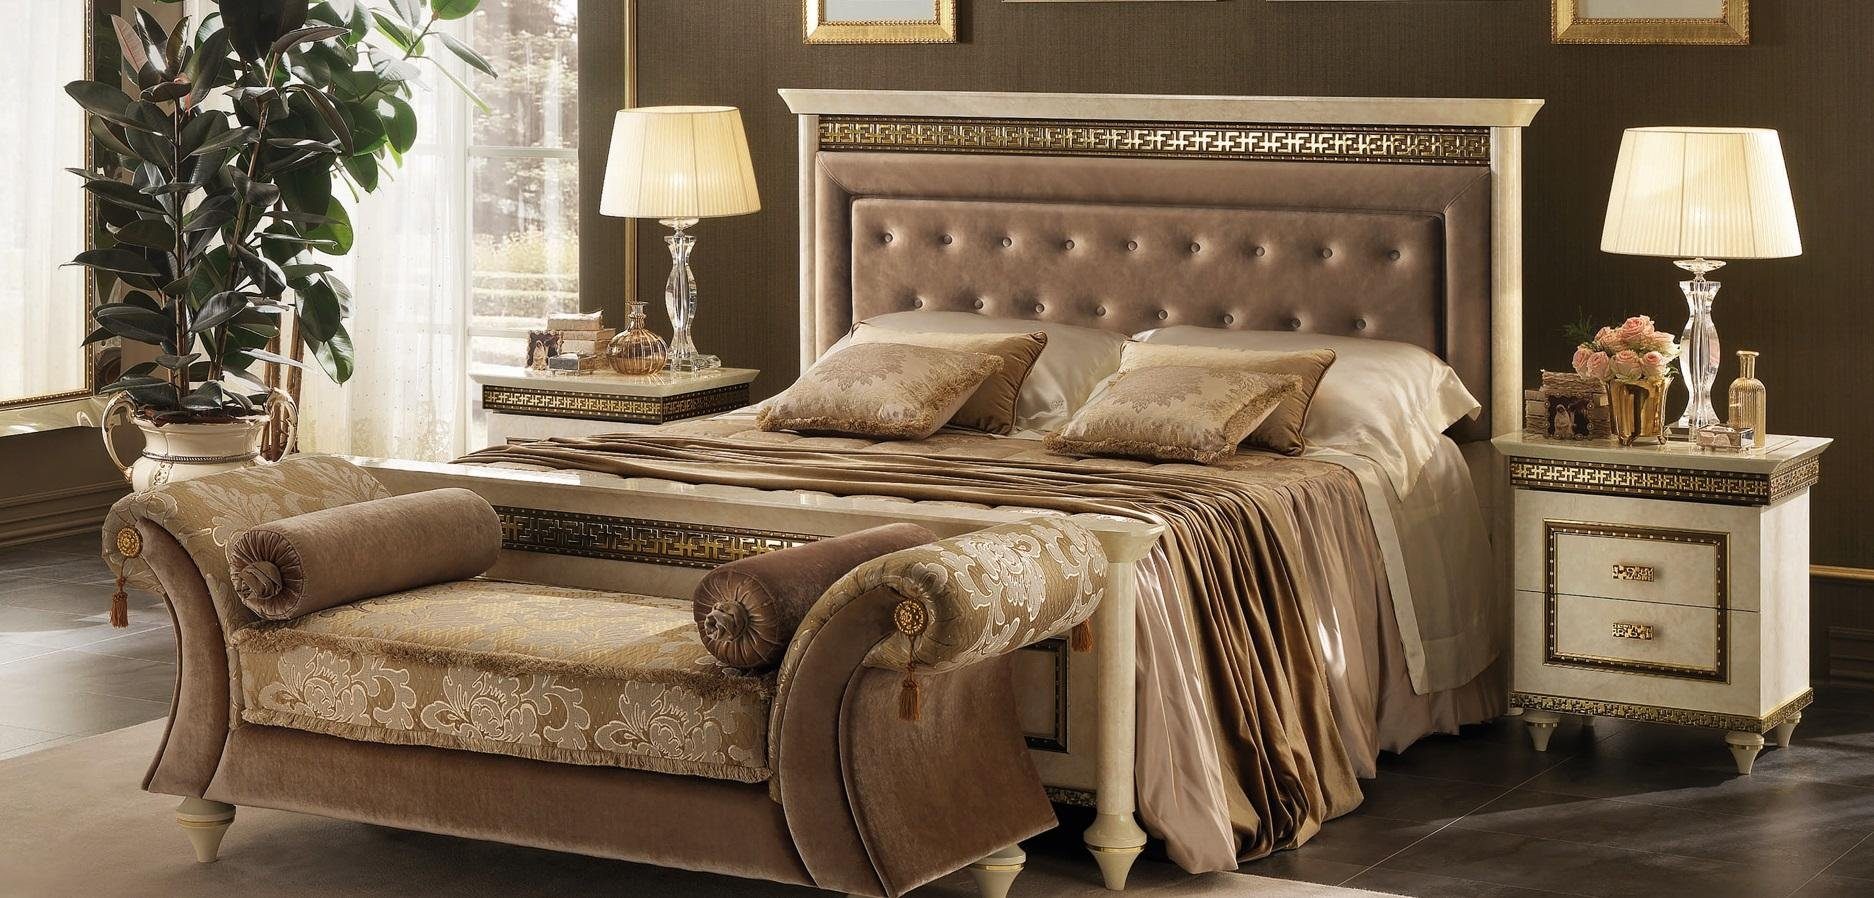 JVmoebel Bett Klassisches Bett arredoclassic Doppelbett Barock Polsterbett Rokoko